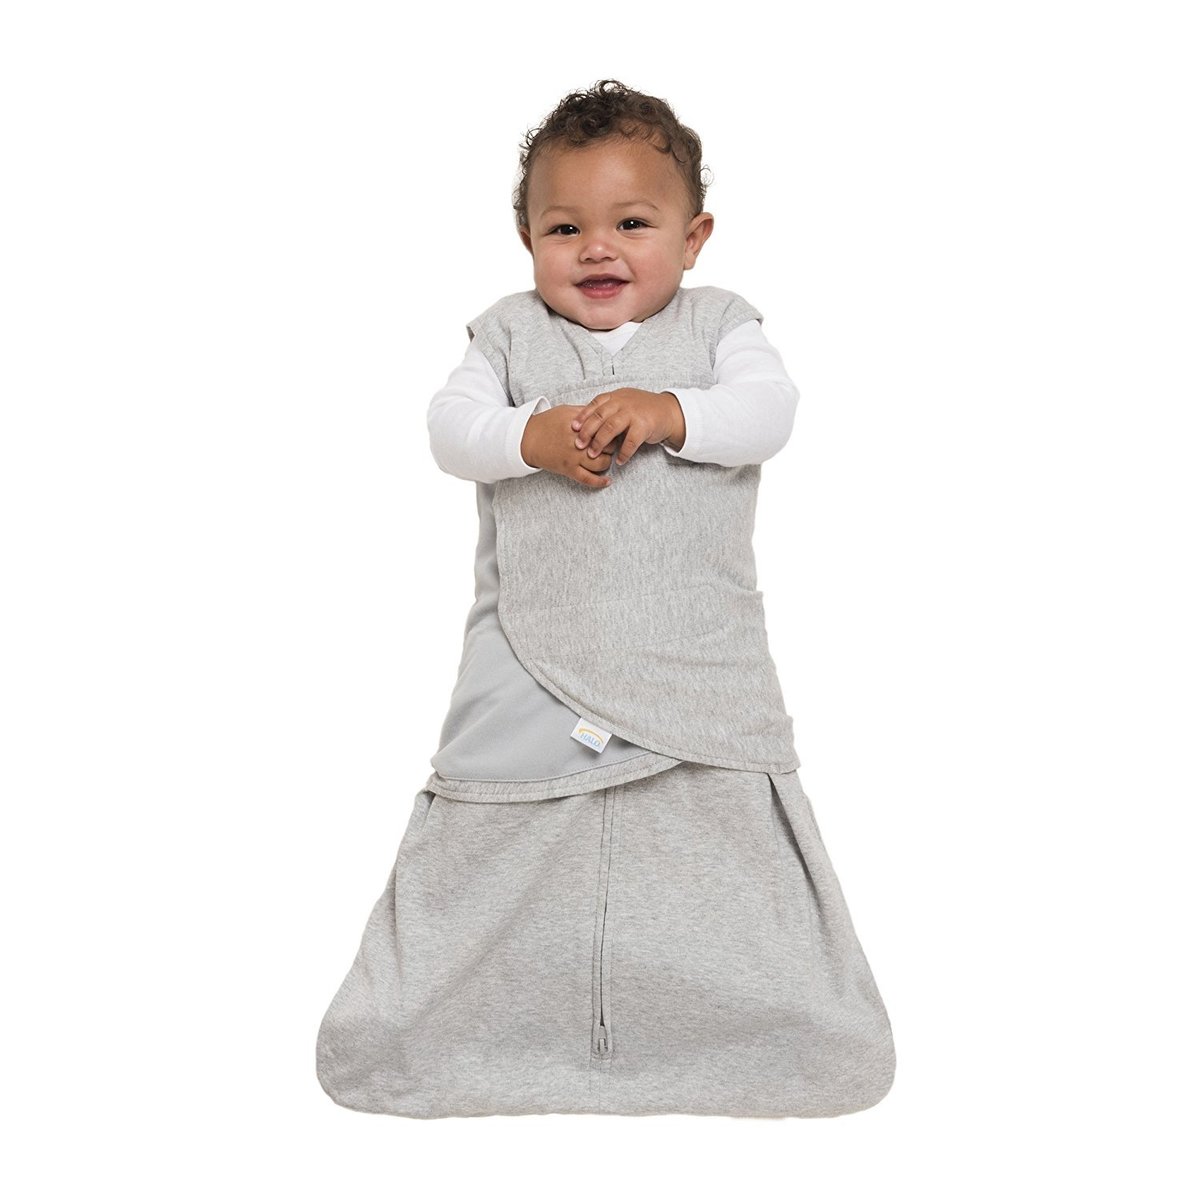 HALO SleepSack Swaddle Ideal Temp Baby Sleeping Bag, 1.5 Tog, Grey